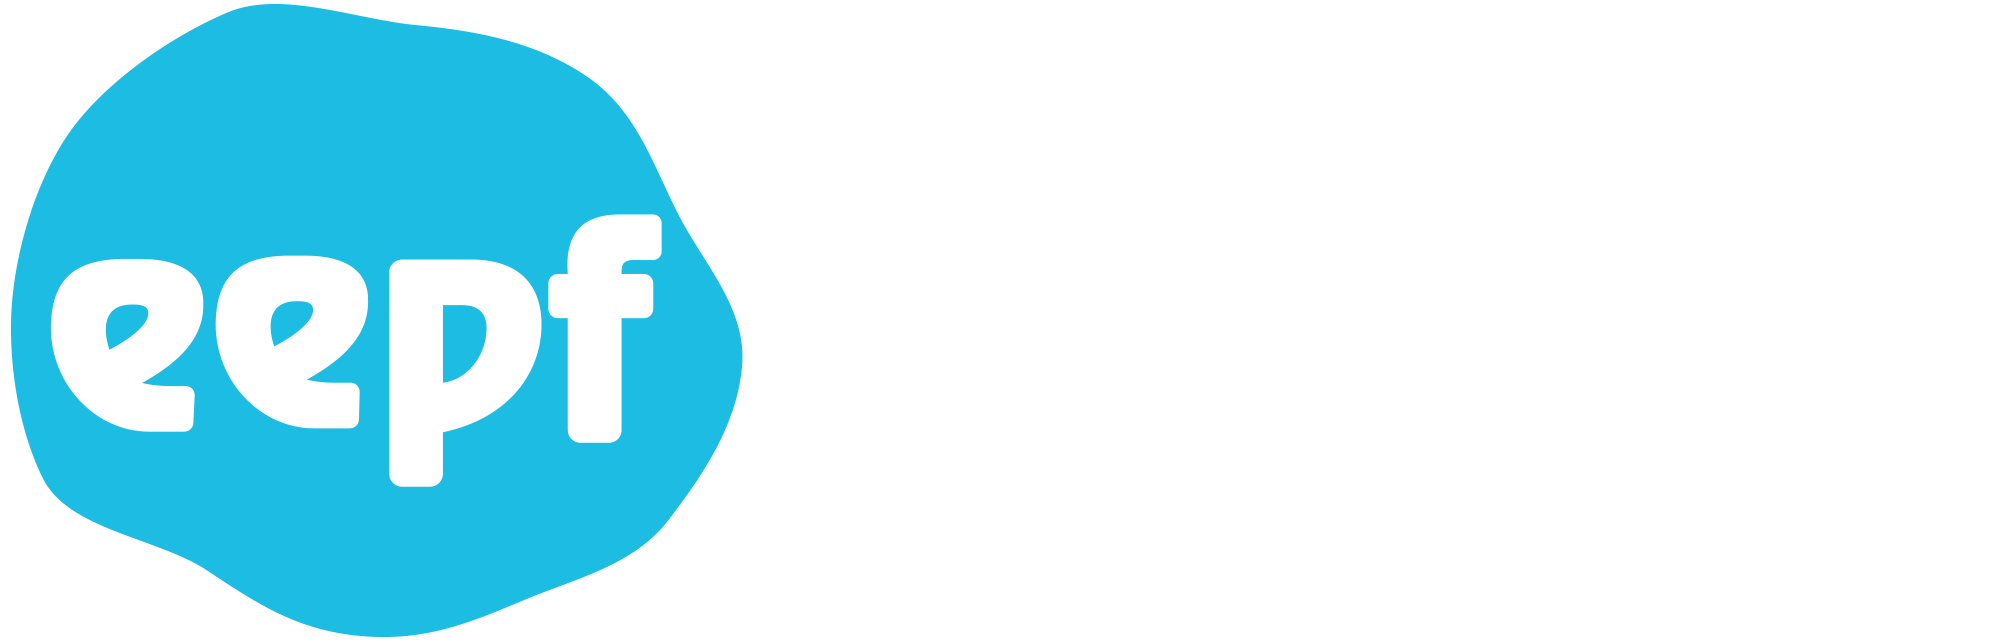 TOP | eepf – Environmental Education Promotion Forum –